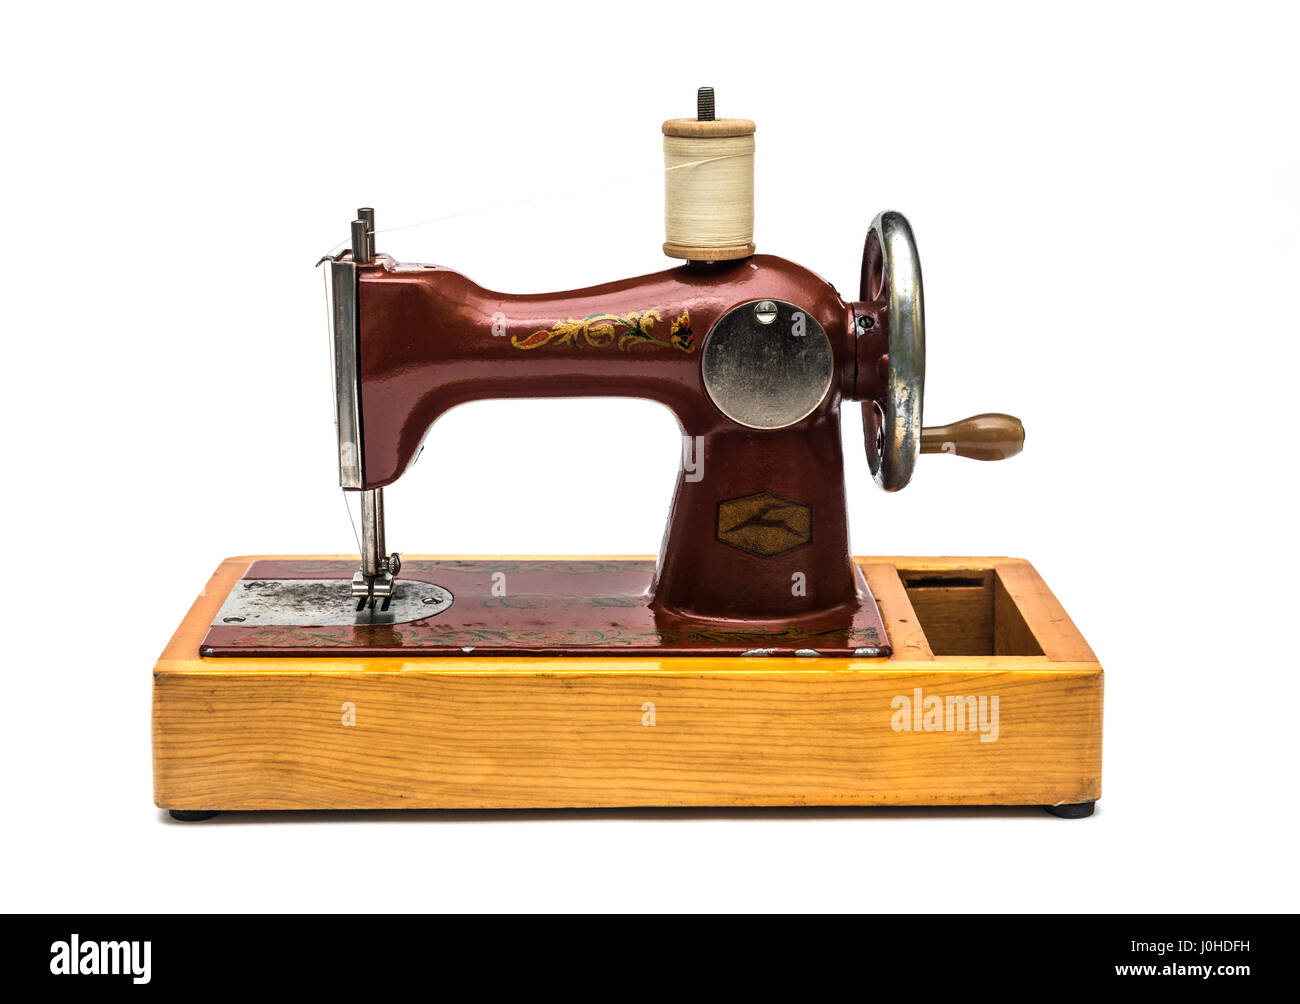 Máquina de coser fotografías e imágenes de alta resolución - Alamy